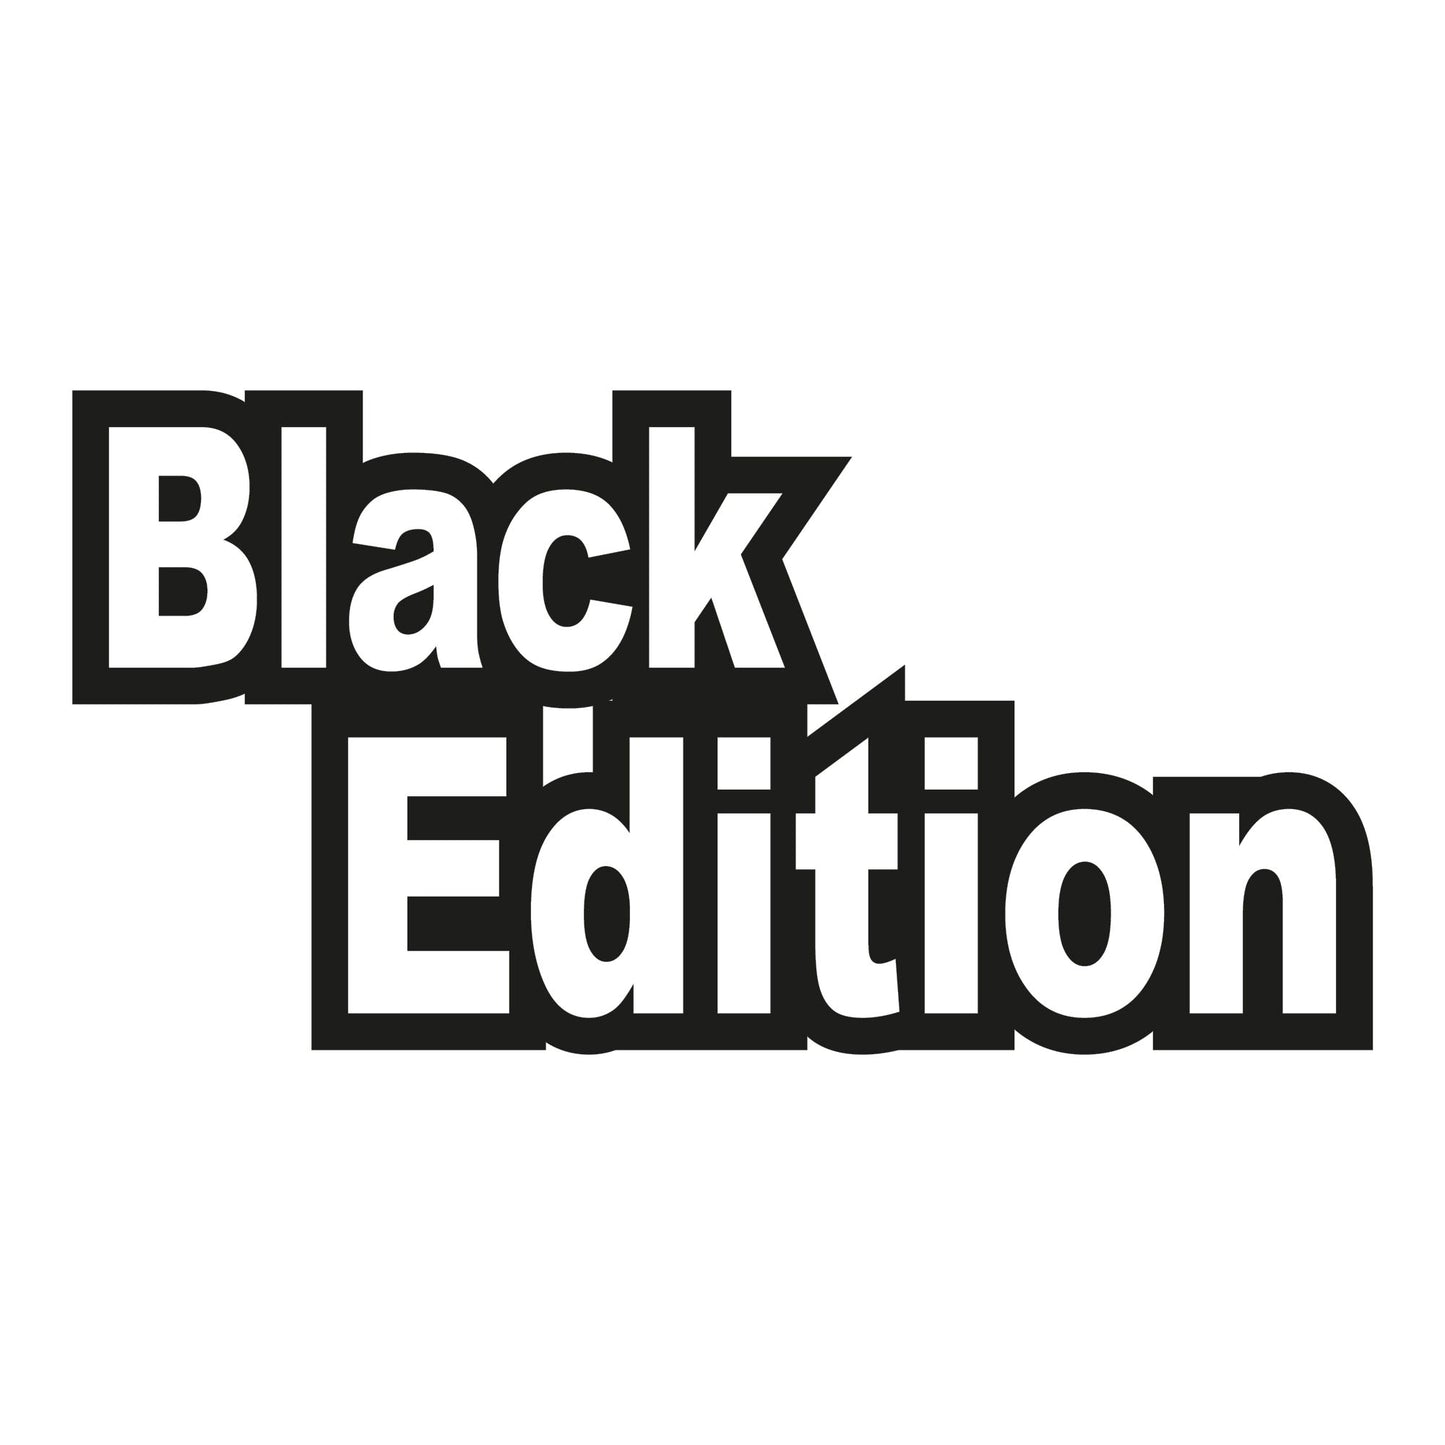 Autoaufkleber - Black edition - 210x100mm